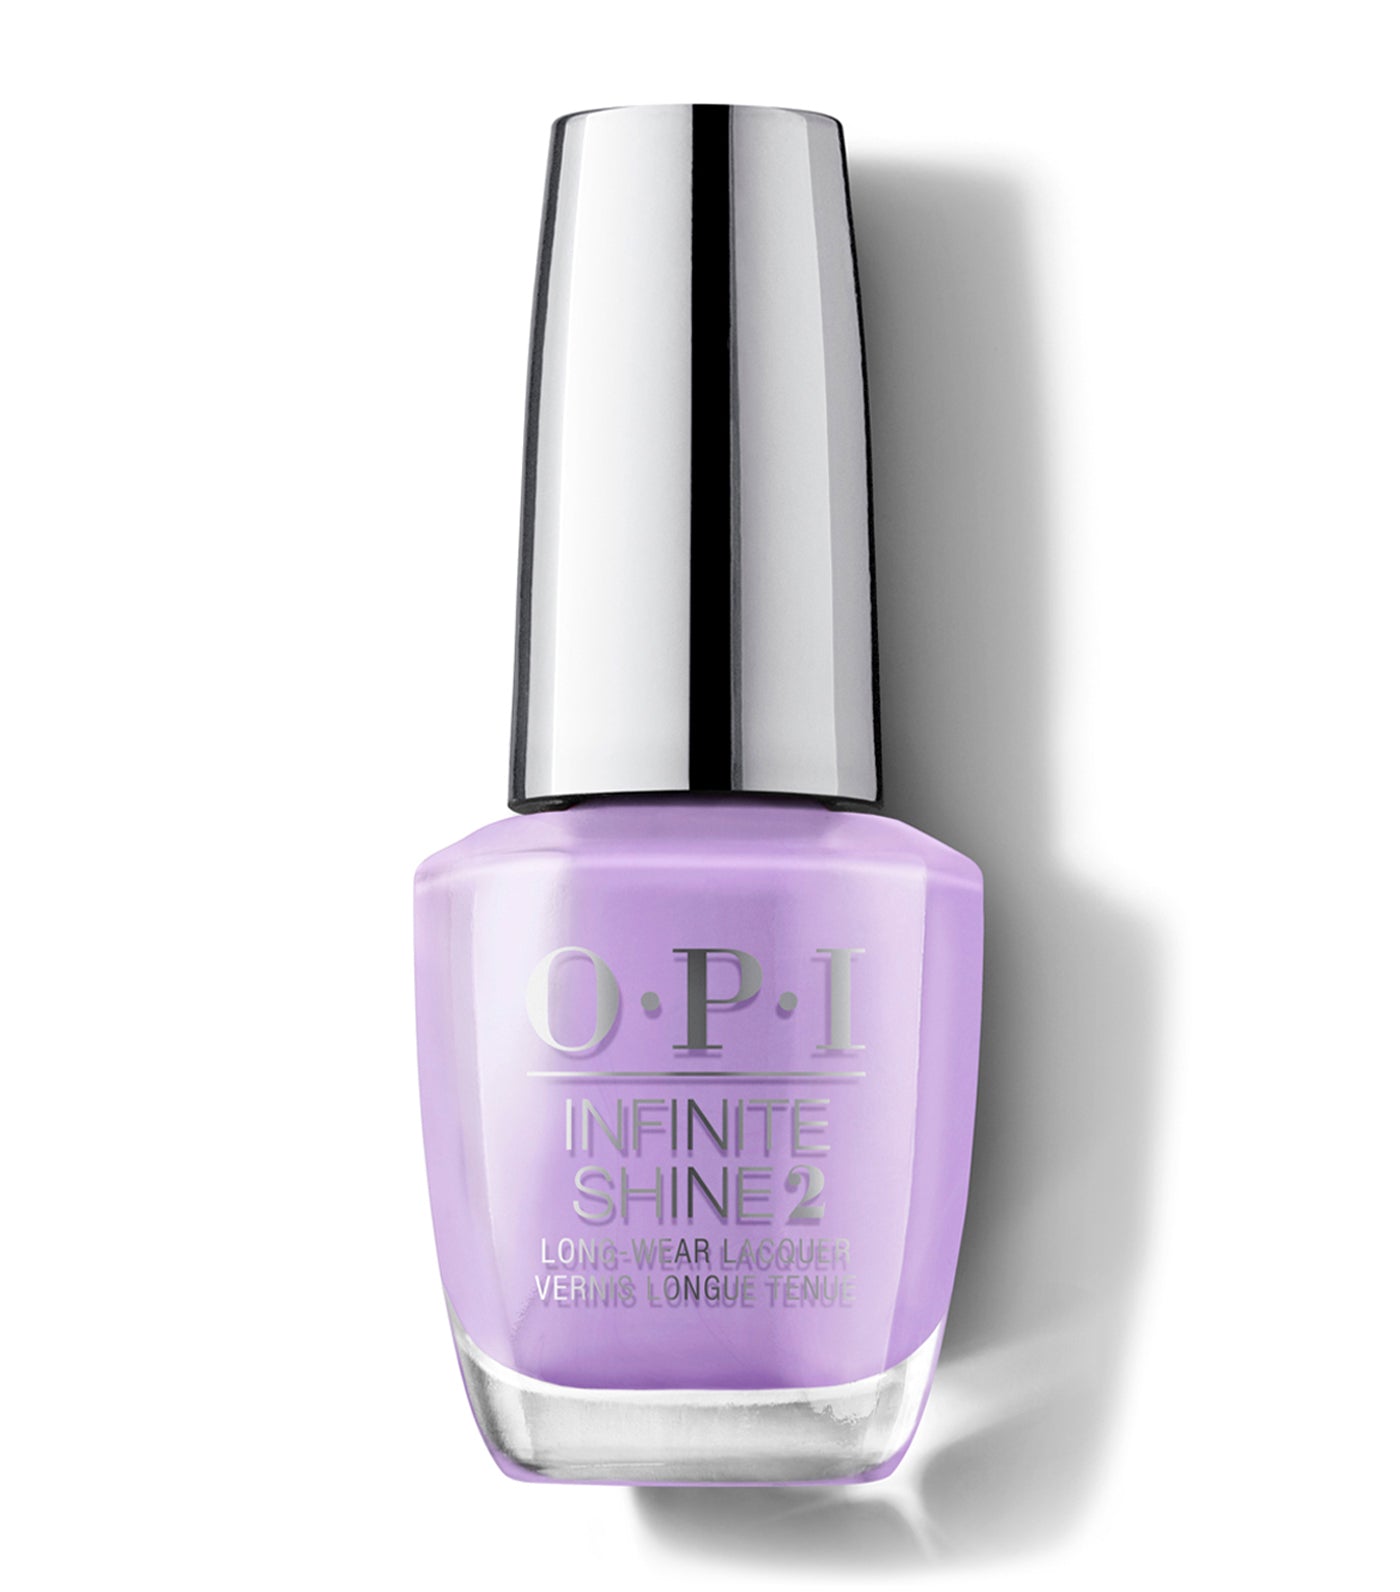 Infinite Shine 2 - Purples